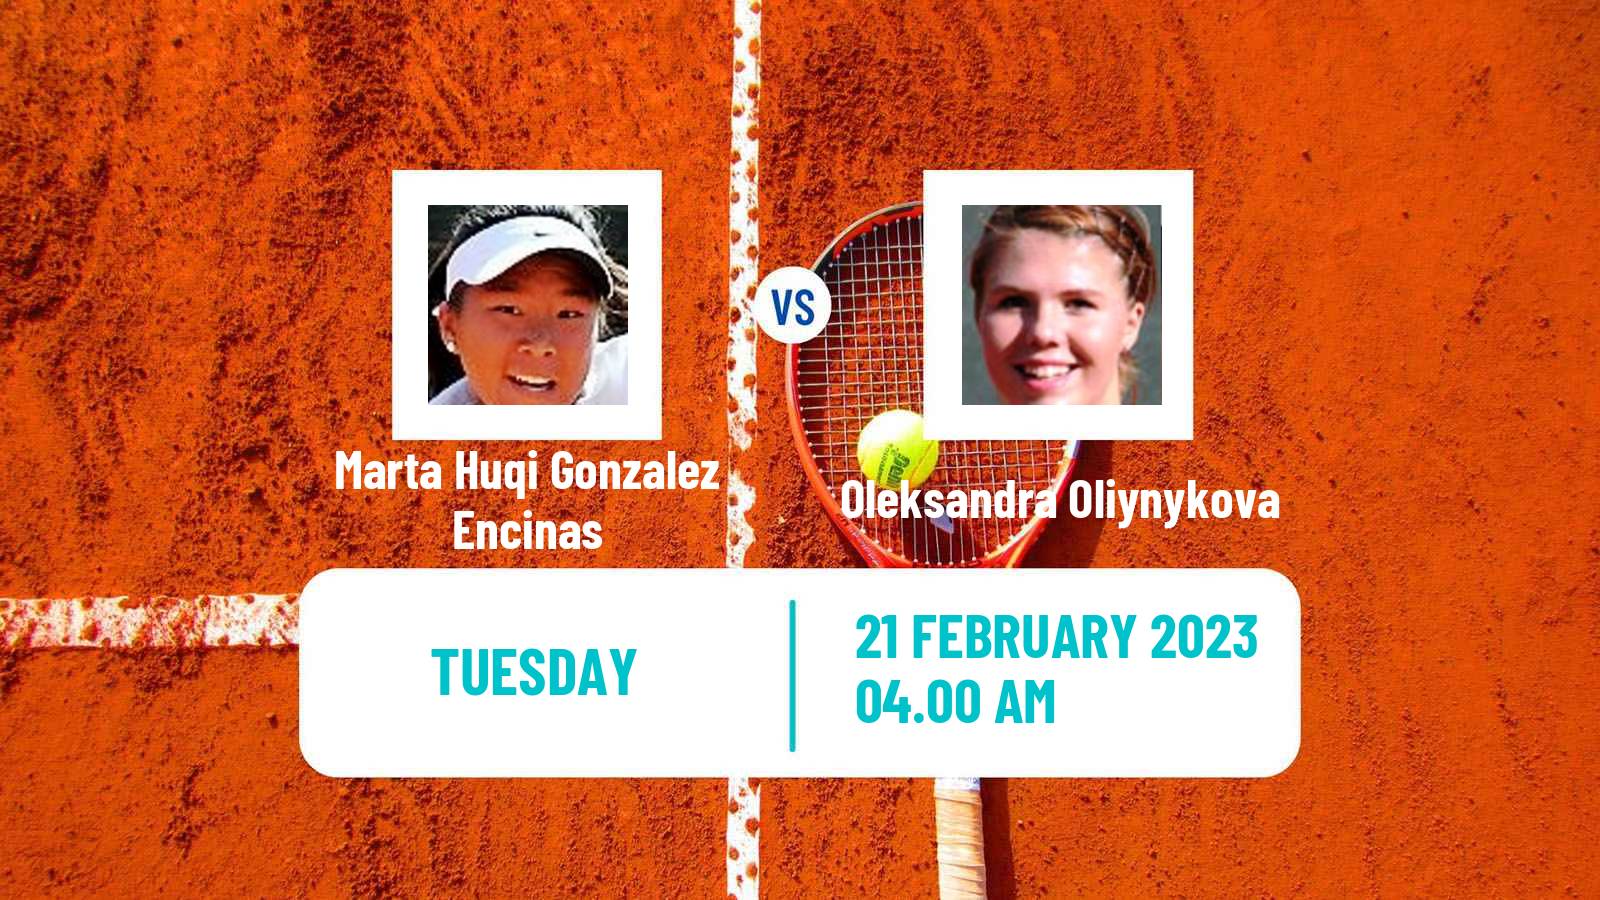 Tennis ITF Tournaments Marta Huqi Gonzalez Encinas - Oleksandra Oliynykova